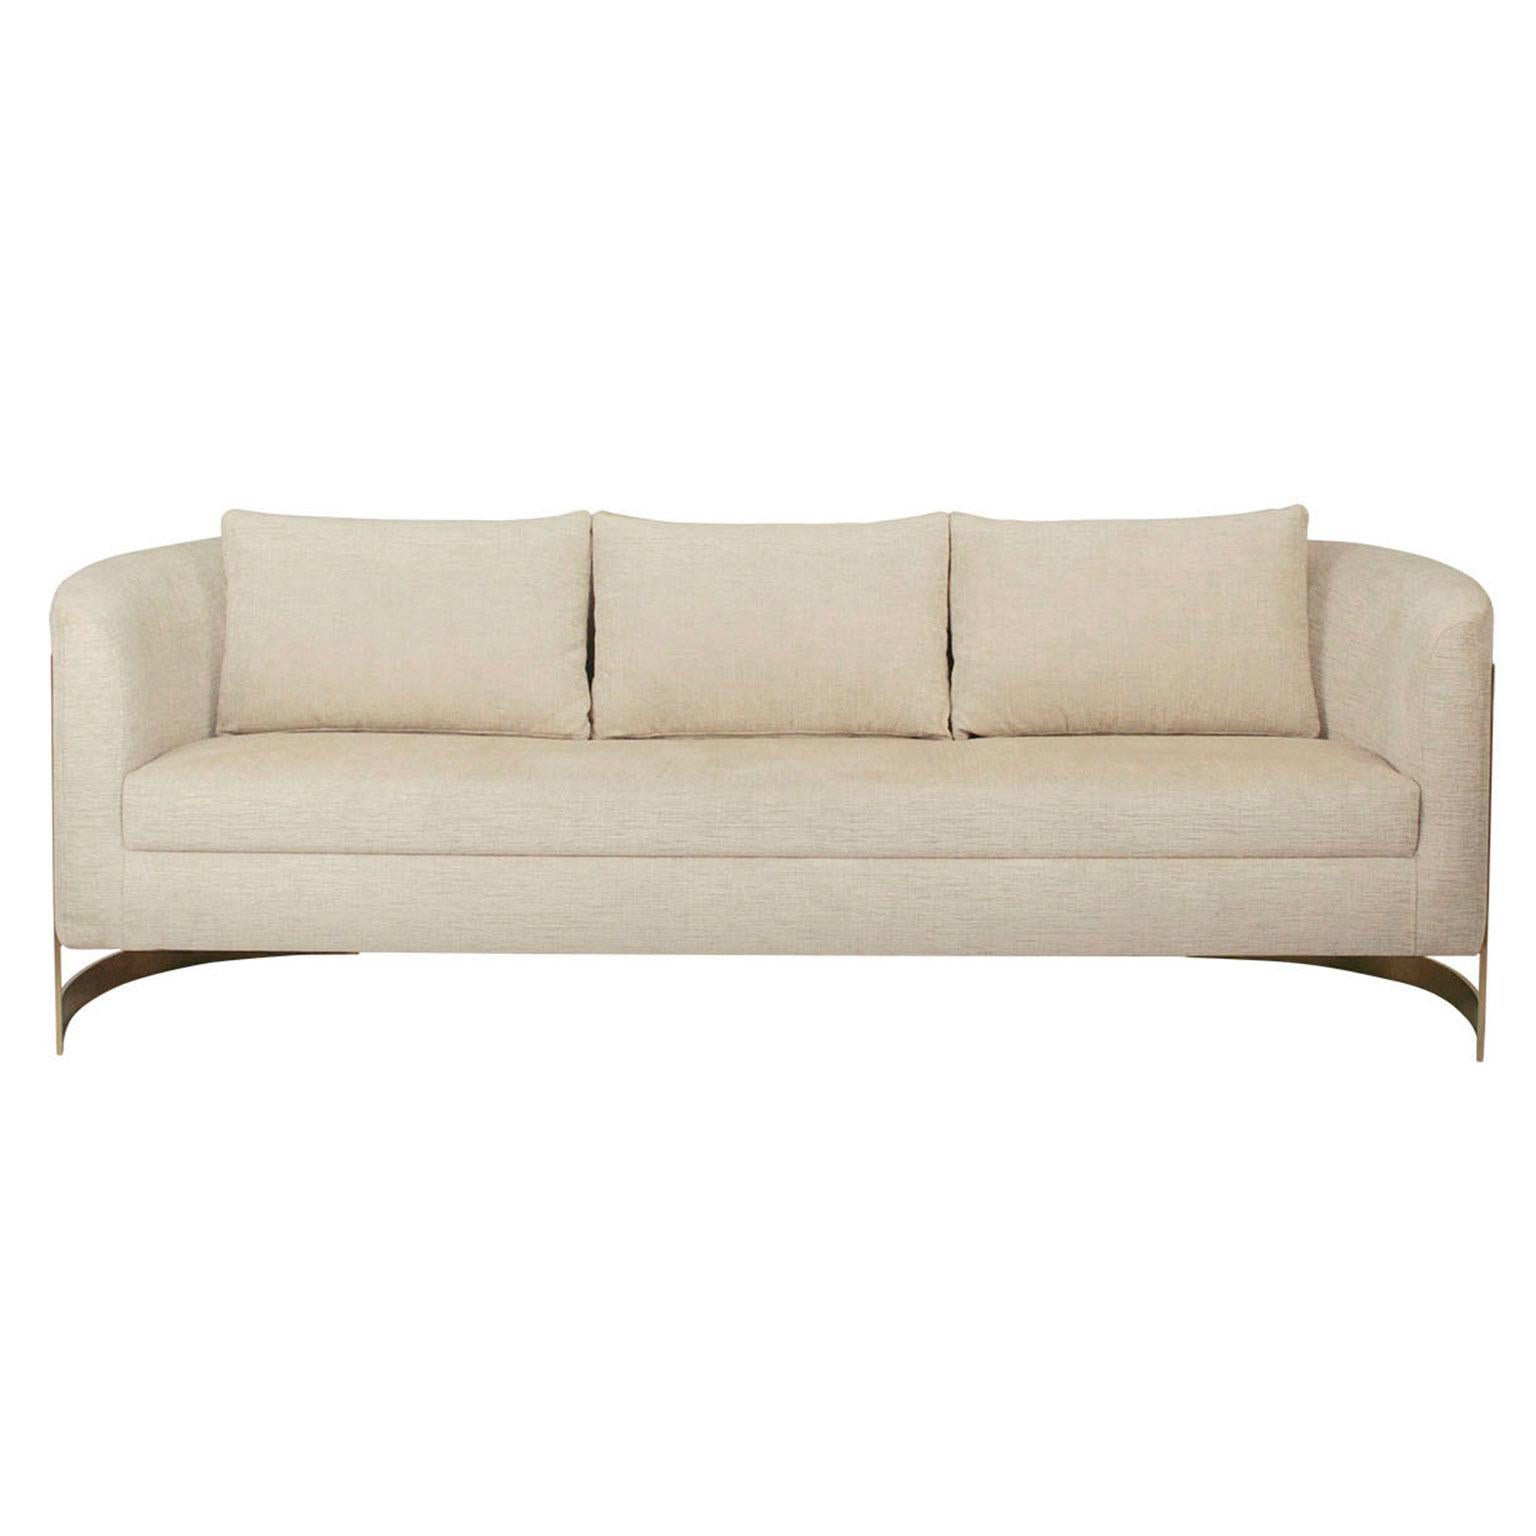 modern sofa with metal legs